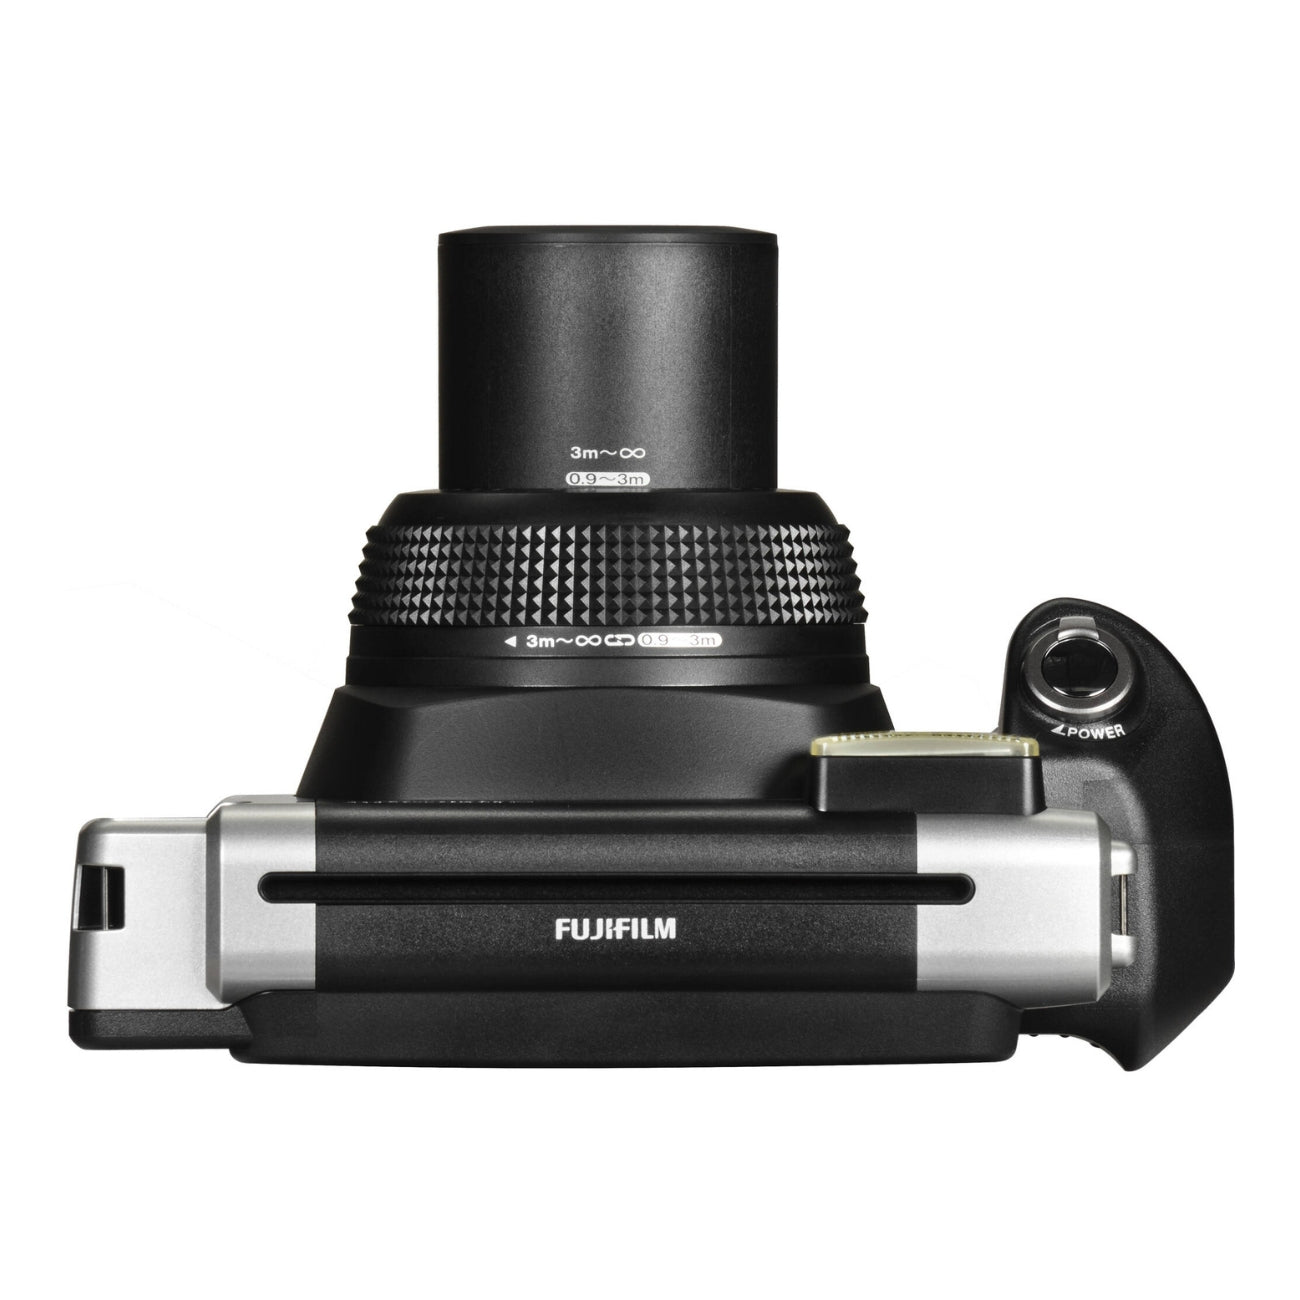 FUJIFILM INSTAX Wide 300 Instant Film Camera (Black) - Top View